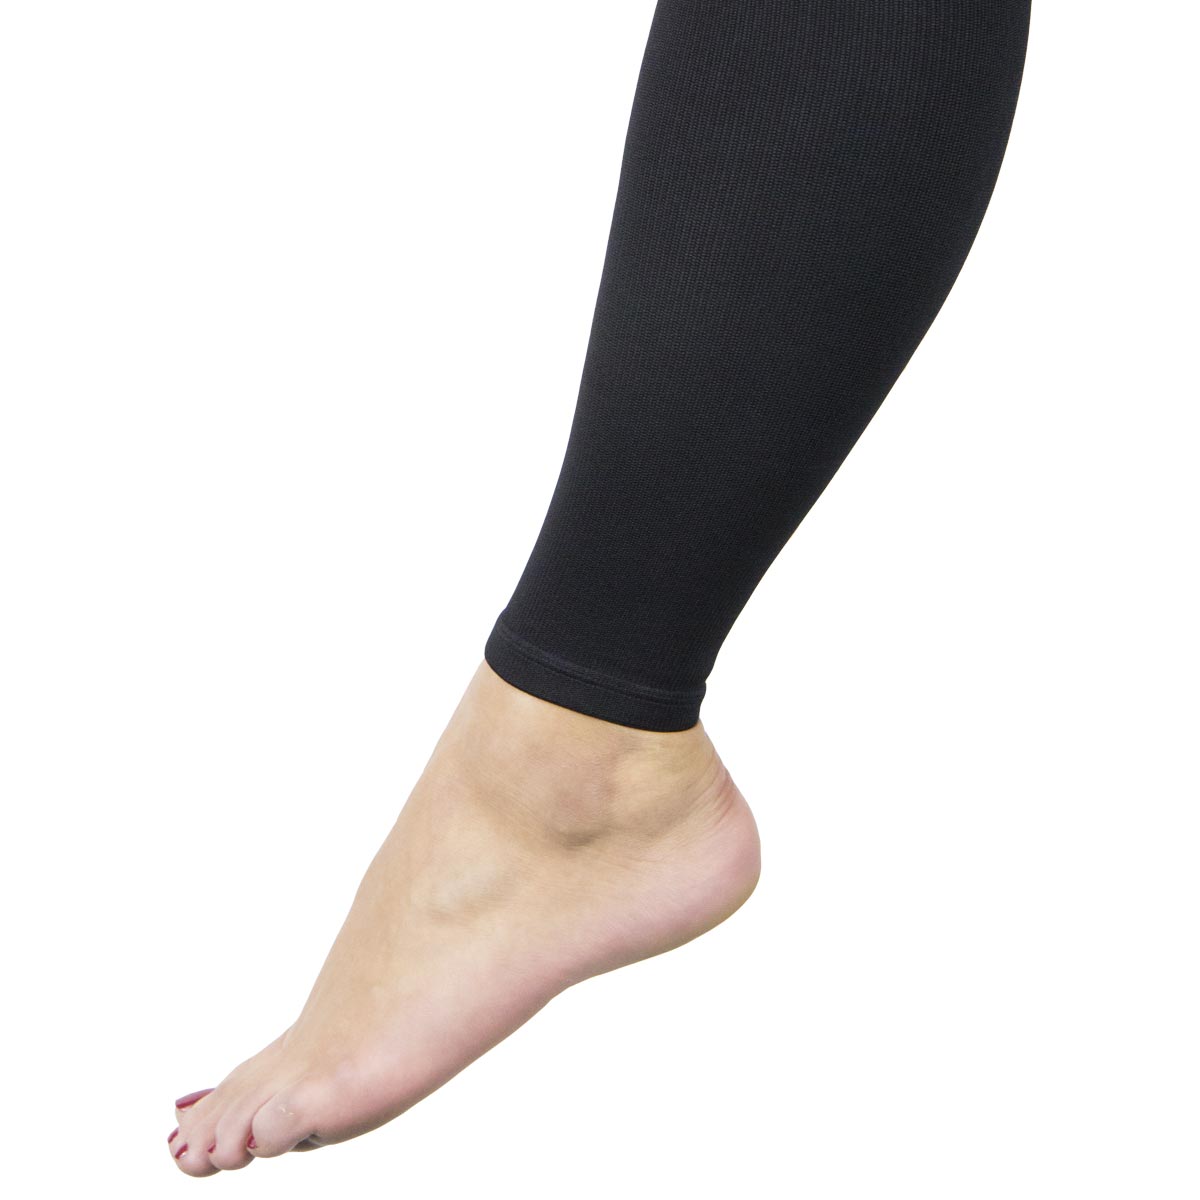 Sigvaris Soft Silhouette Women's Leggings 15-20 mmHg – Compression